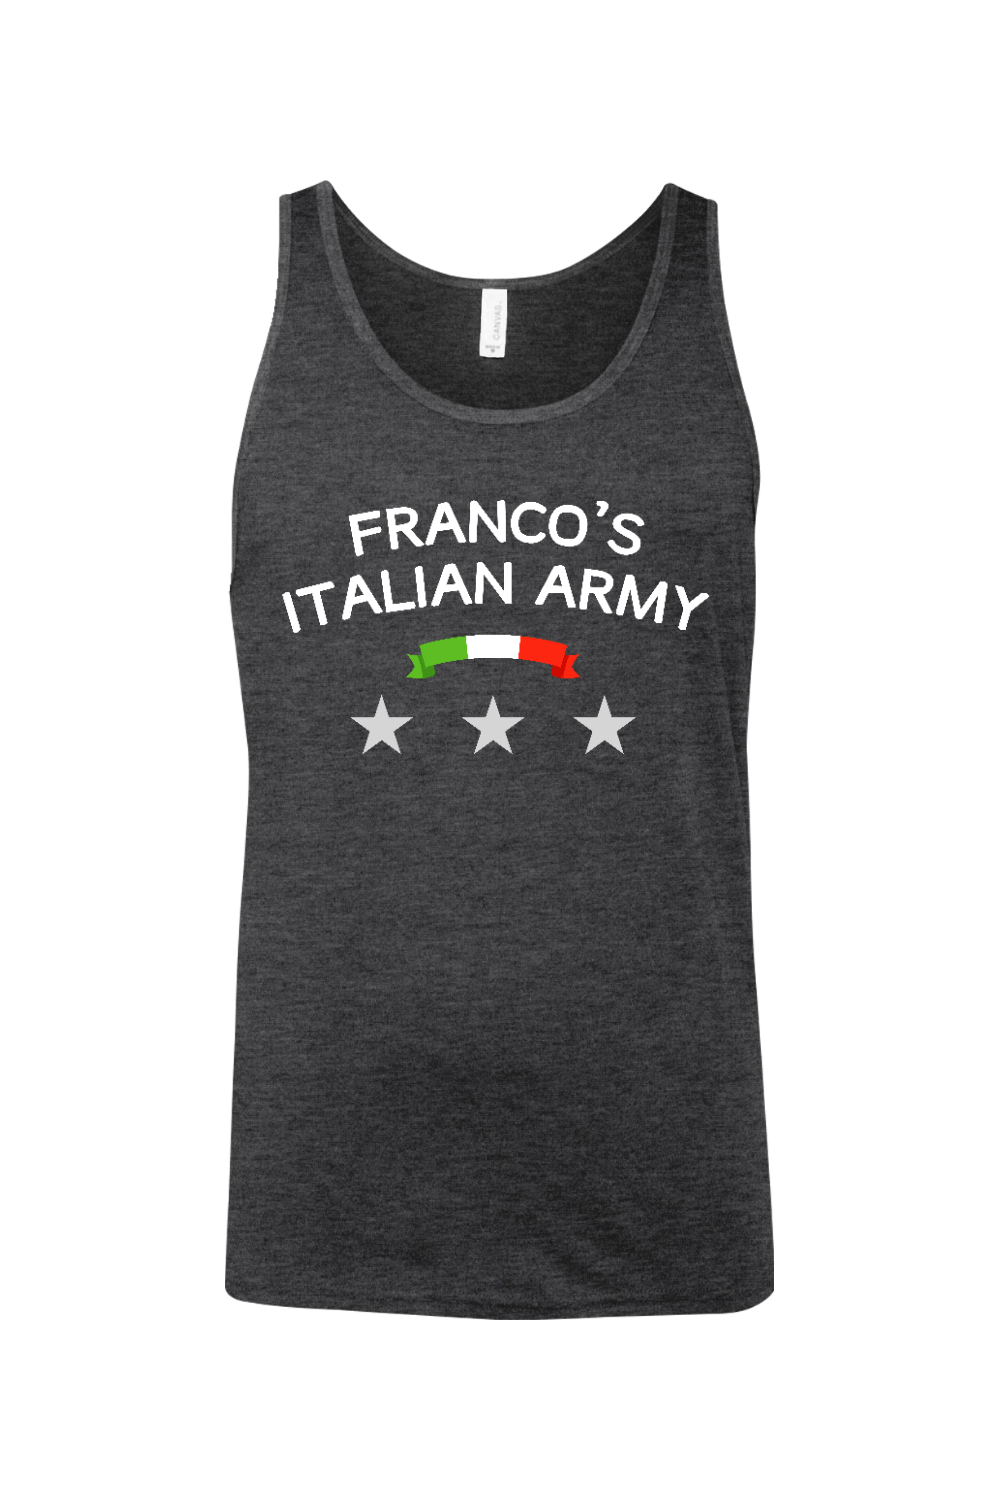 Franco's Italian Army - Unisex Jersey Tank - Yinzylvania